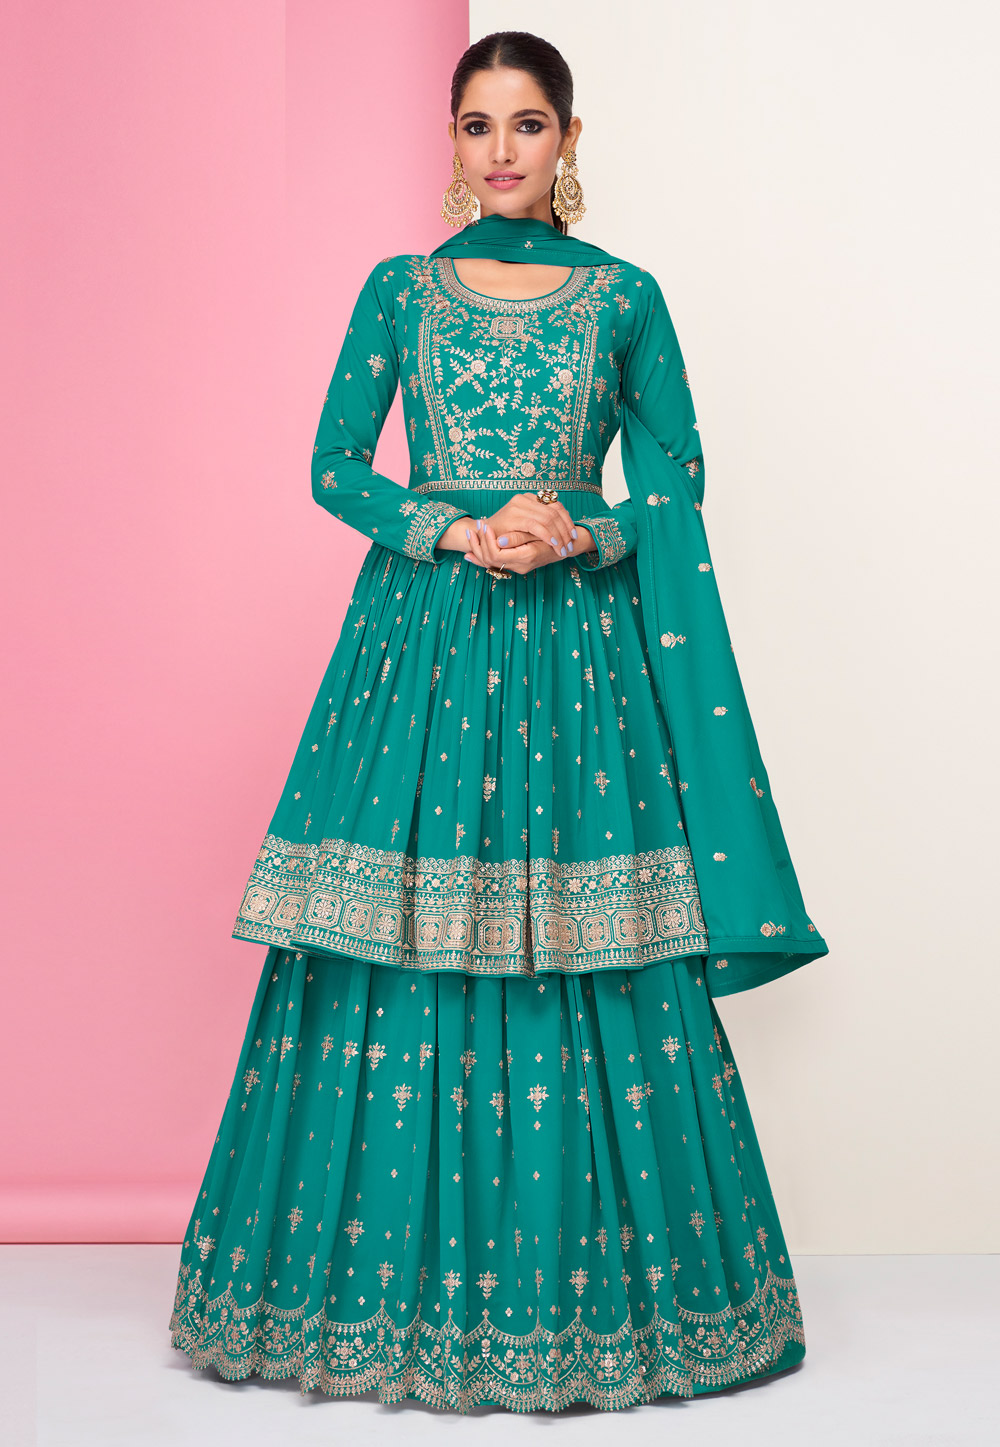 Bridal Lacha Lehenga Choli Suit Designer Lengha Indian Wedding Wear  Bollywood | eBay